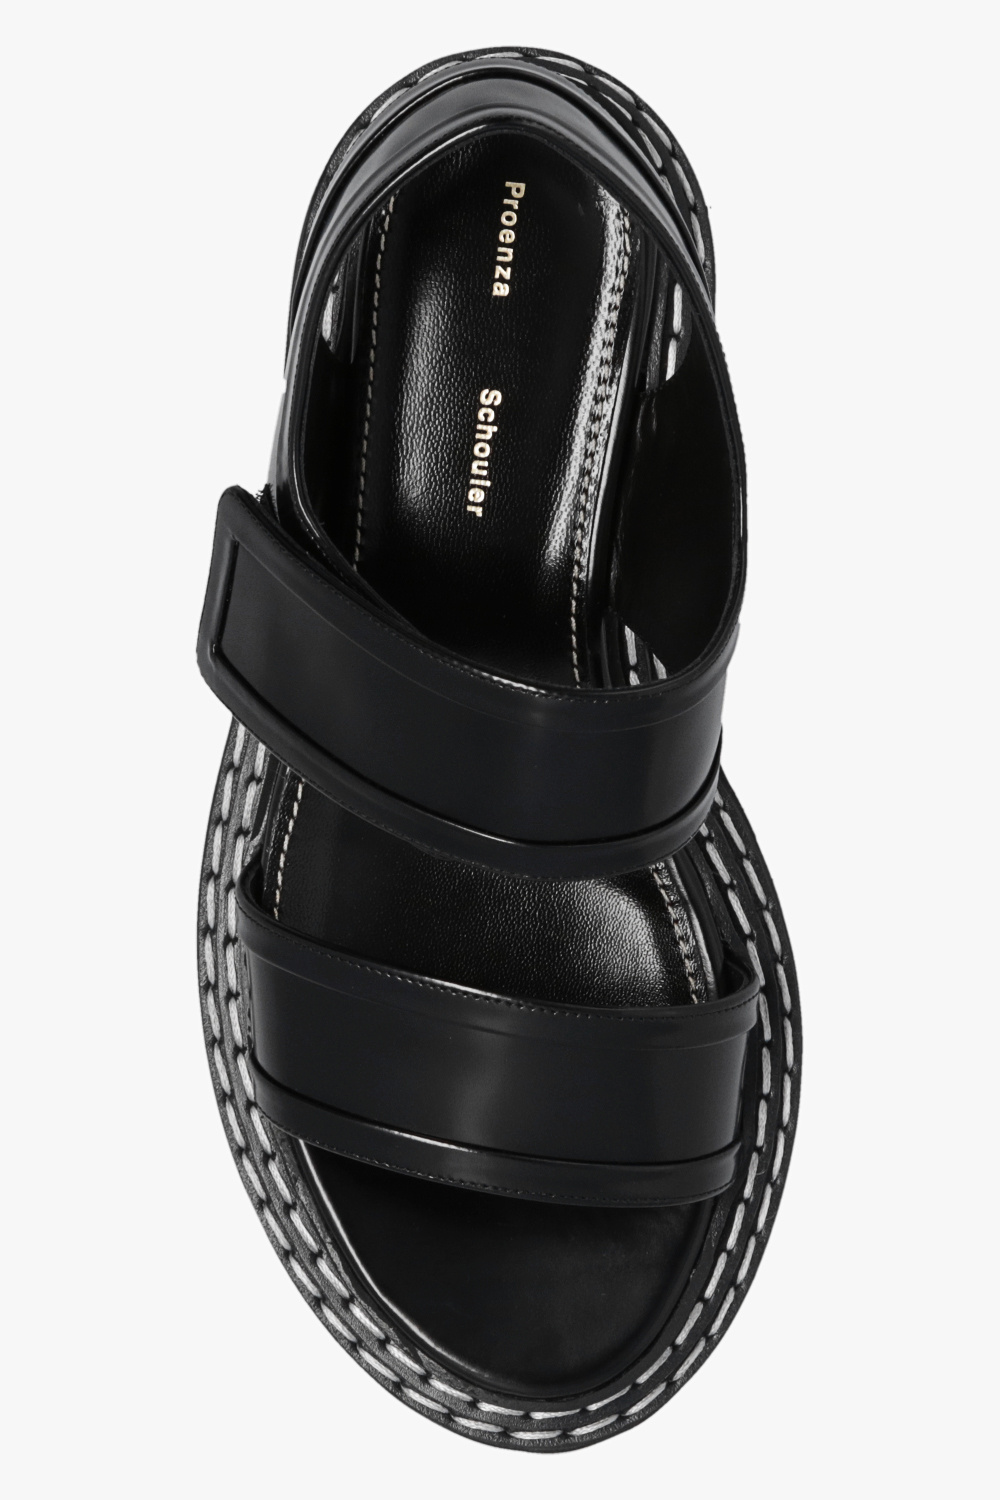 Proenza Schouler Leather sandals